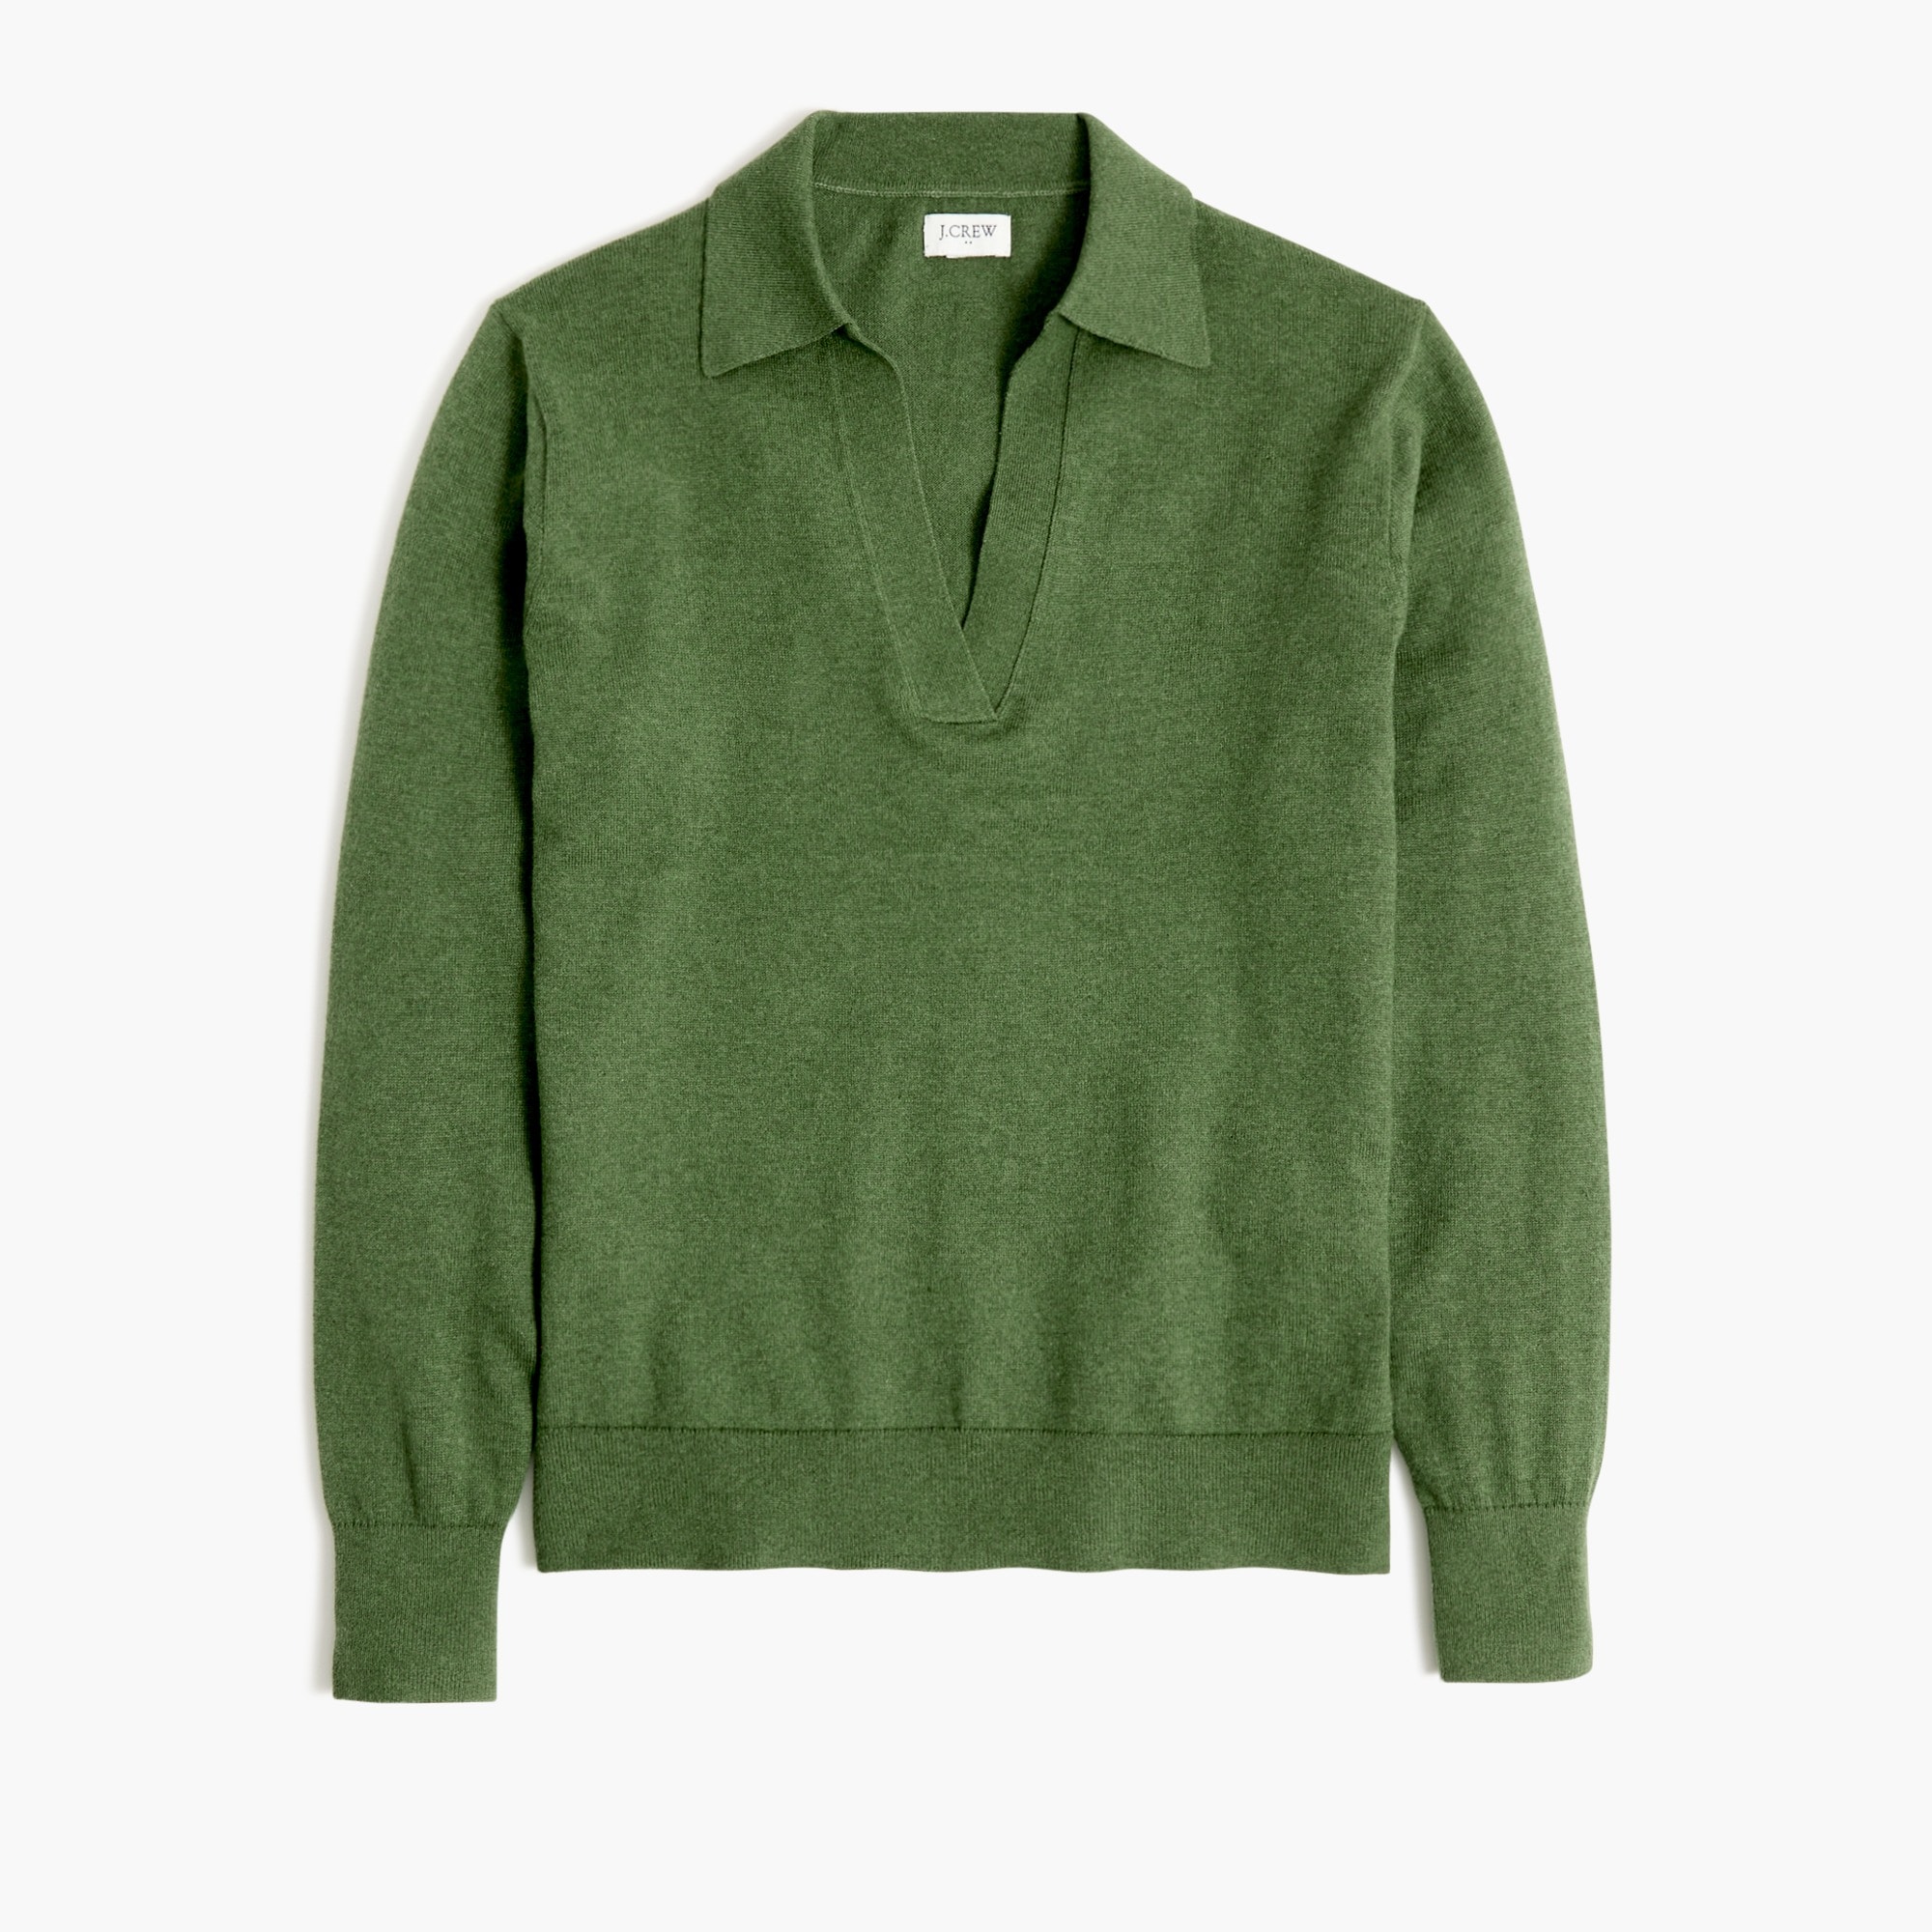  Cotton sweater-polo